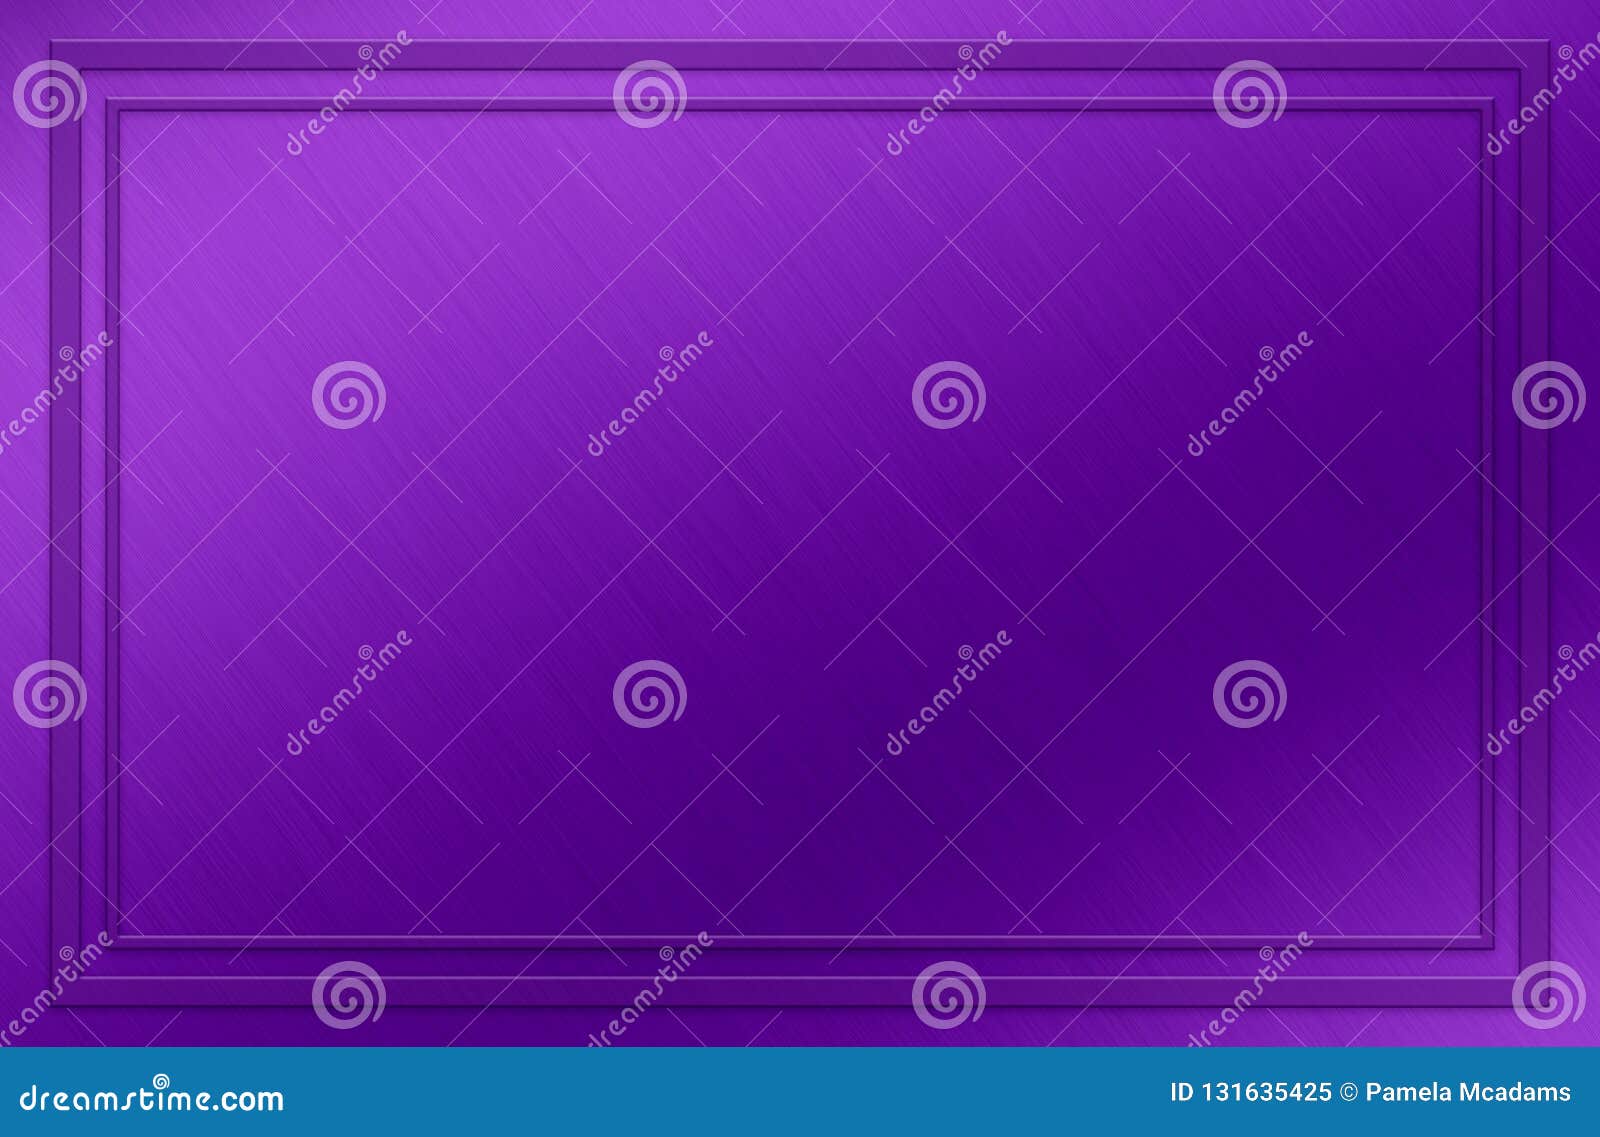 Photo Elegant purple background texture Image 4902646